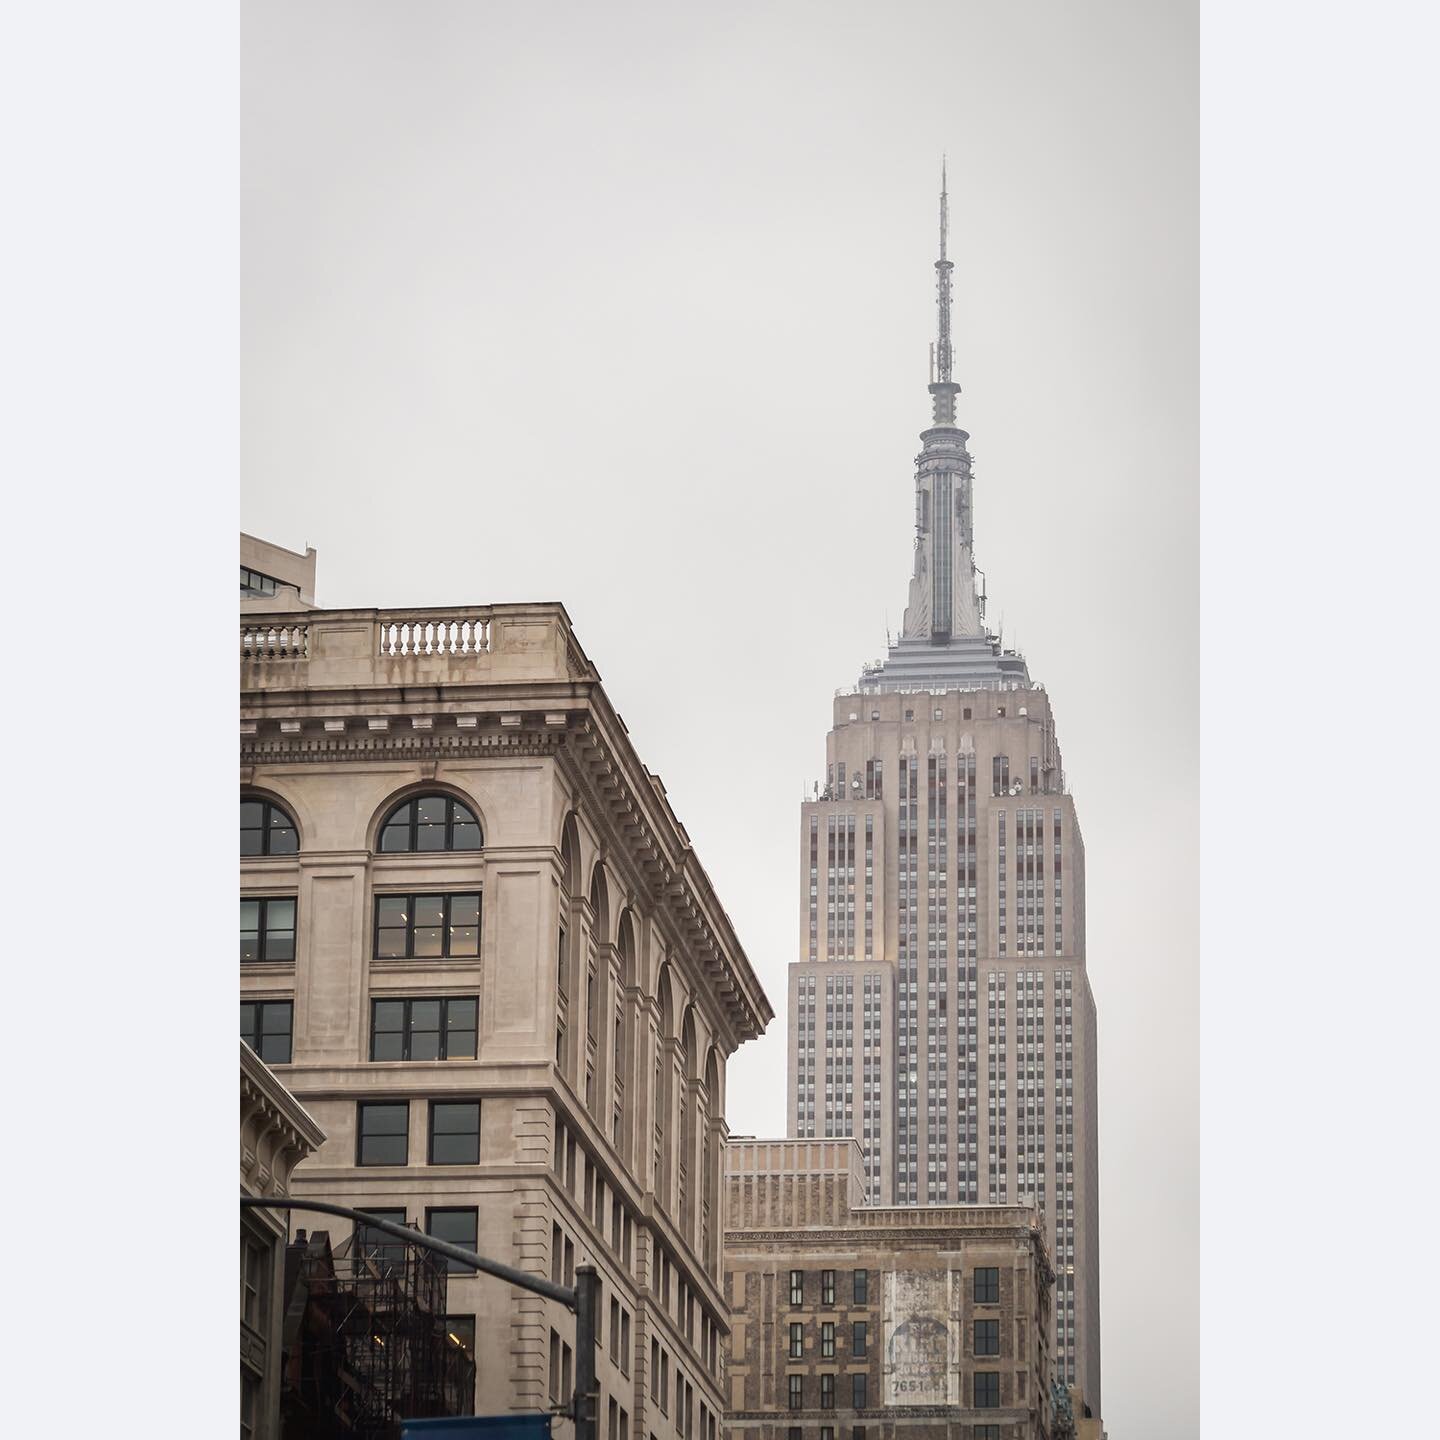 Midtown Empire - NYC
.
.
#NYC #EmpireStateBuilding #theonlyone #EmpireStatebldg #NewYorkNewYork #NY #NYCphotography #igersNewYork #ig_NYC #architecturephotography #architecturelovers #picoftheday #photooftheday #NewYorkStateofMind #travelNewYork #ILo